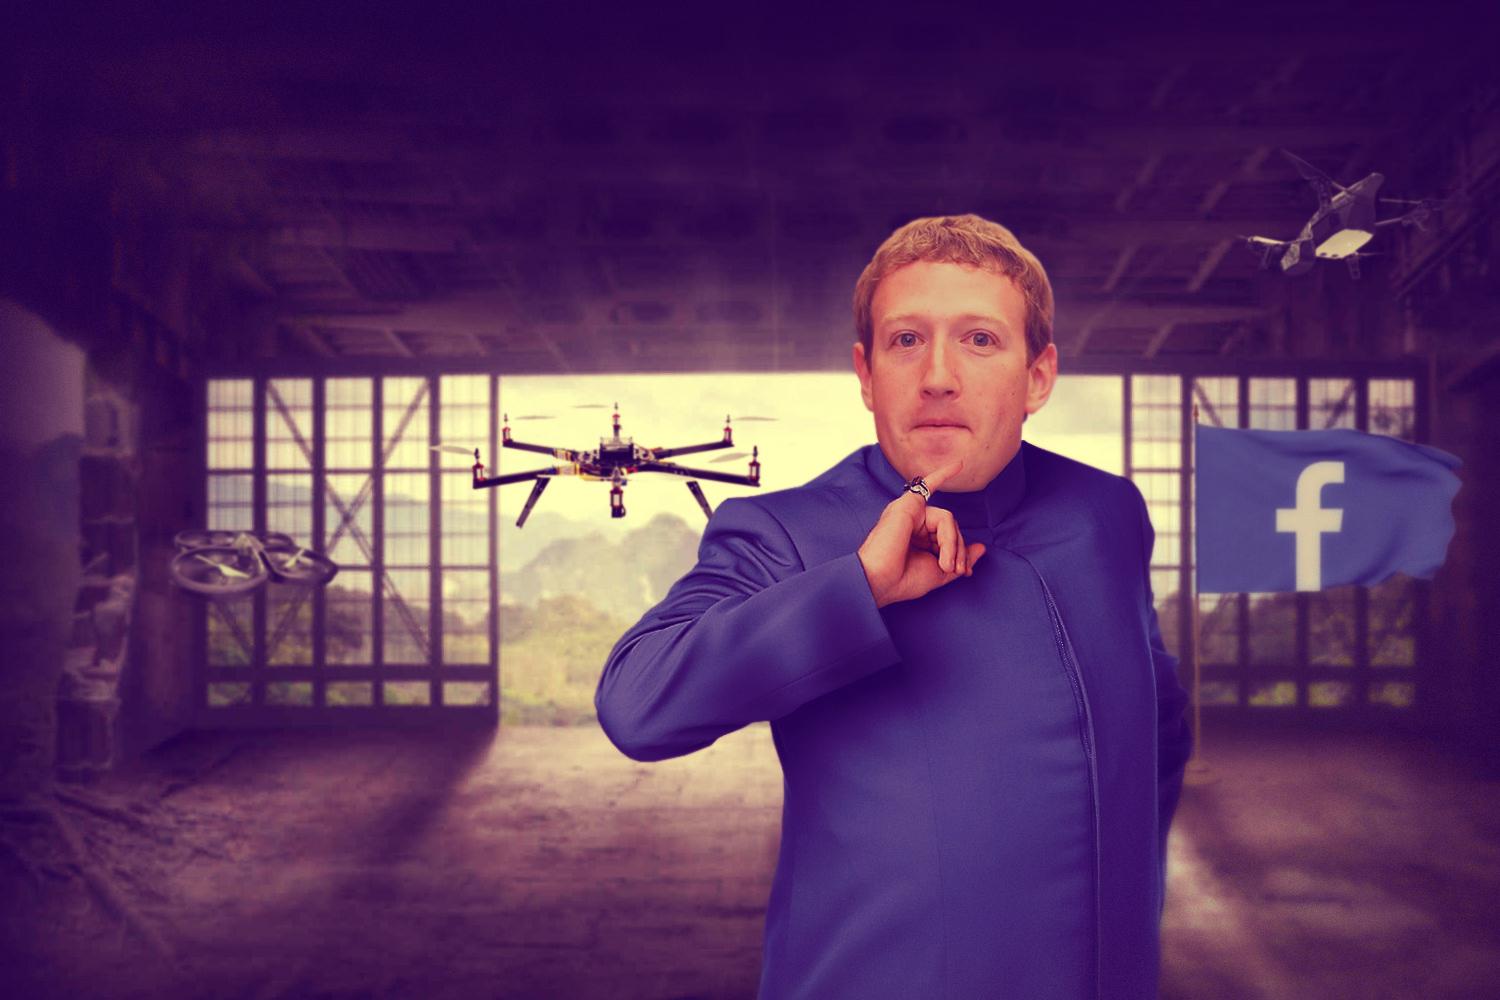 facebook to start testing wi fi drones next year mark zuckerberg internet laser for good or evil 2